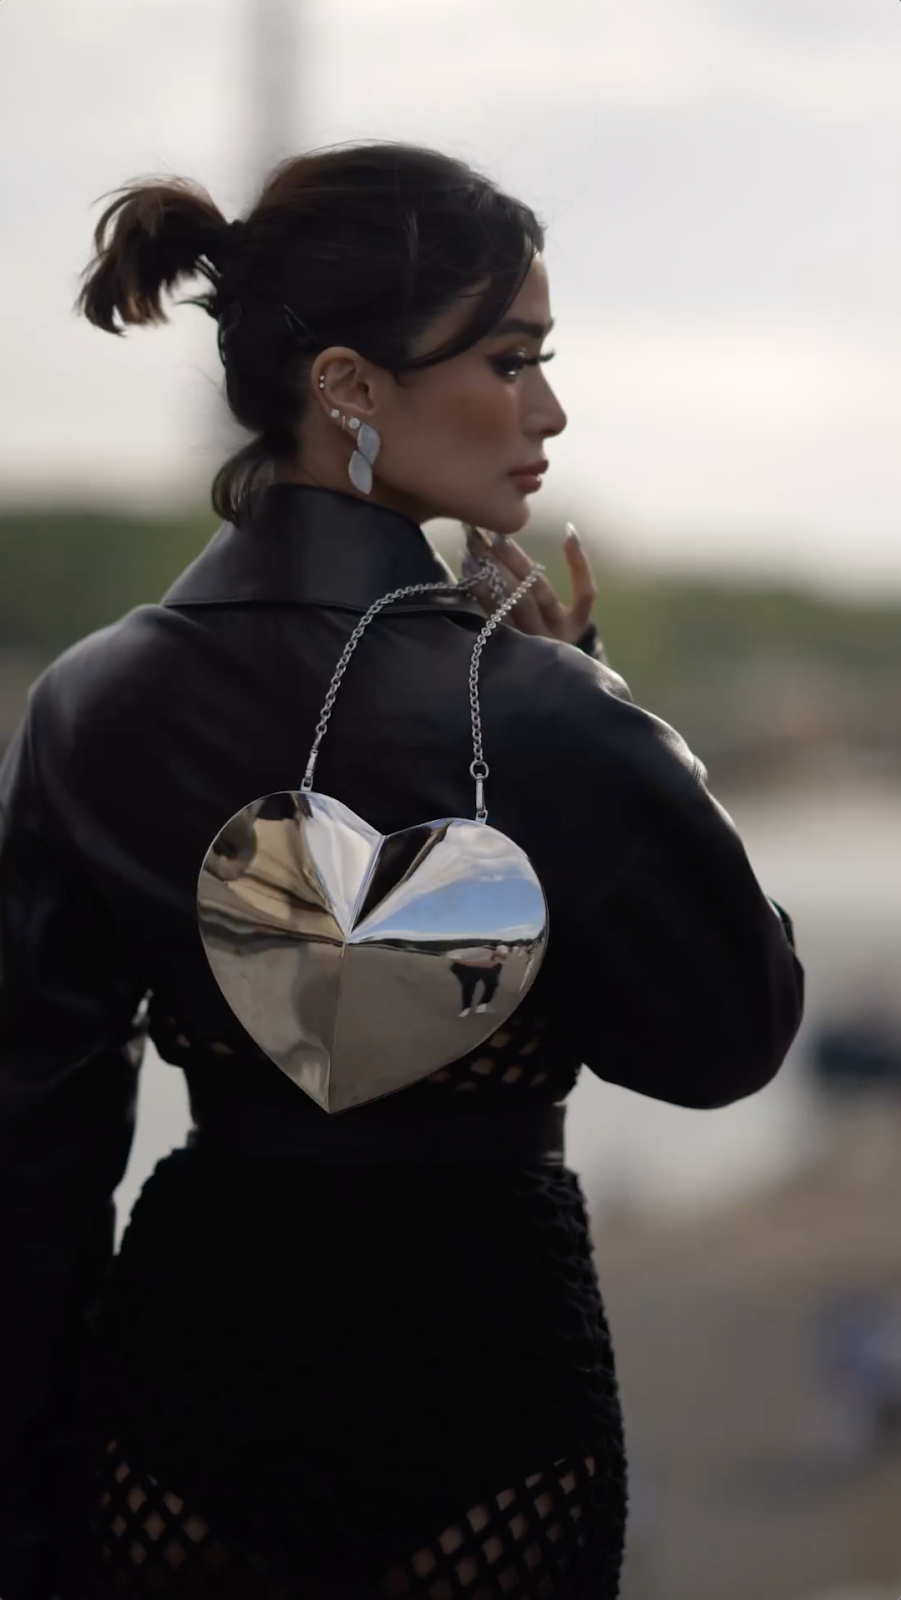 heart-shaped bag